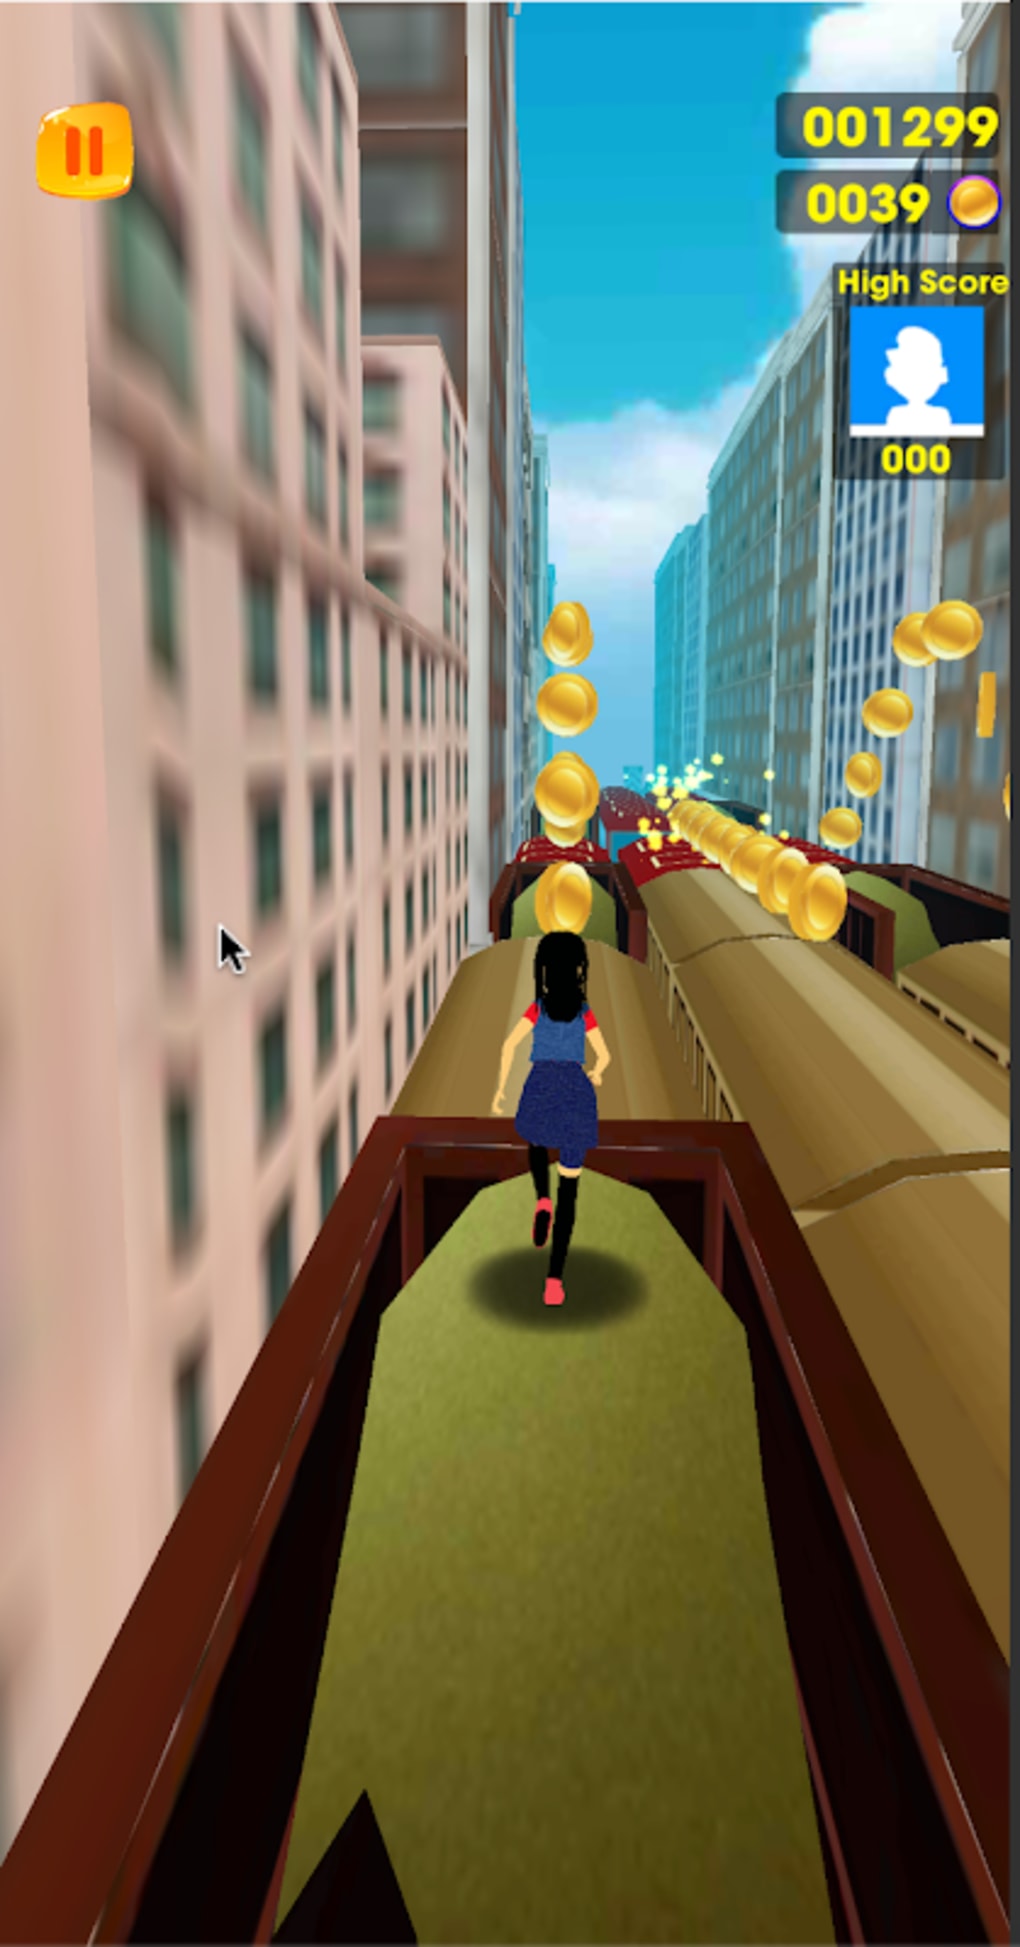 Subway 3D Endles Train SurfRun APK for Android Download